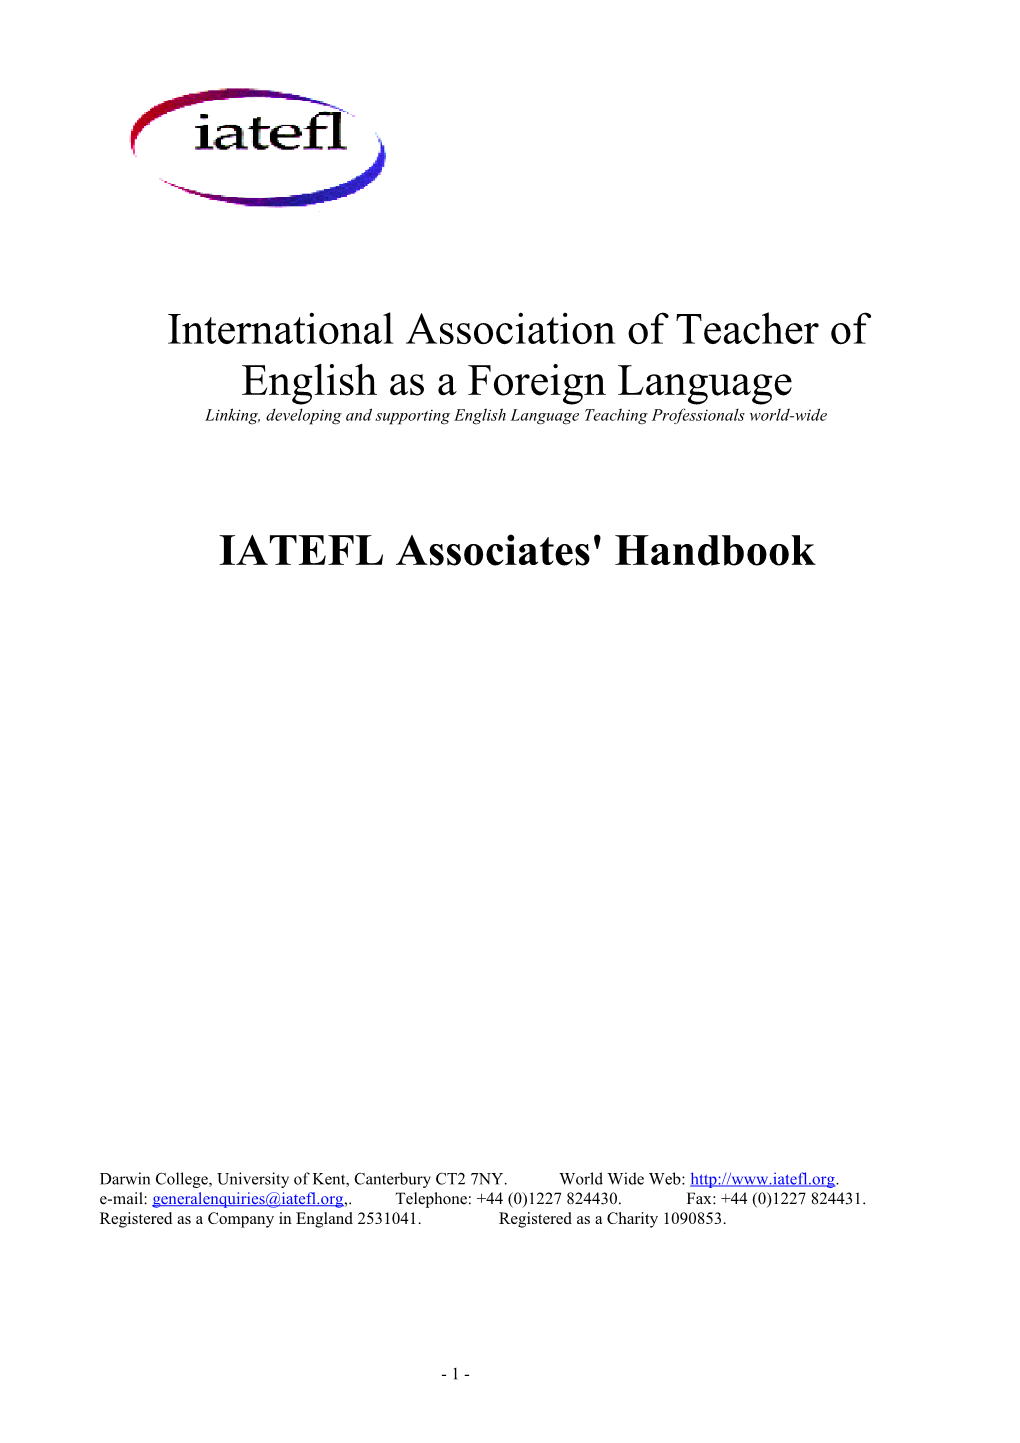 International Association of Teacher of English As a Foreign Language